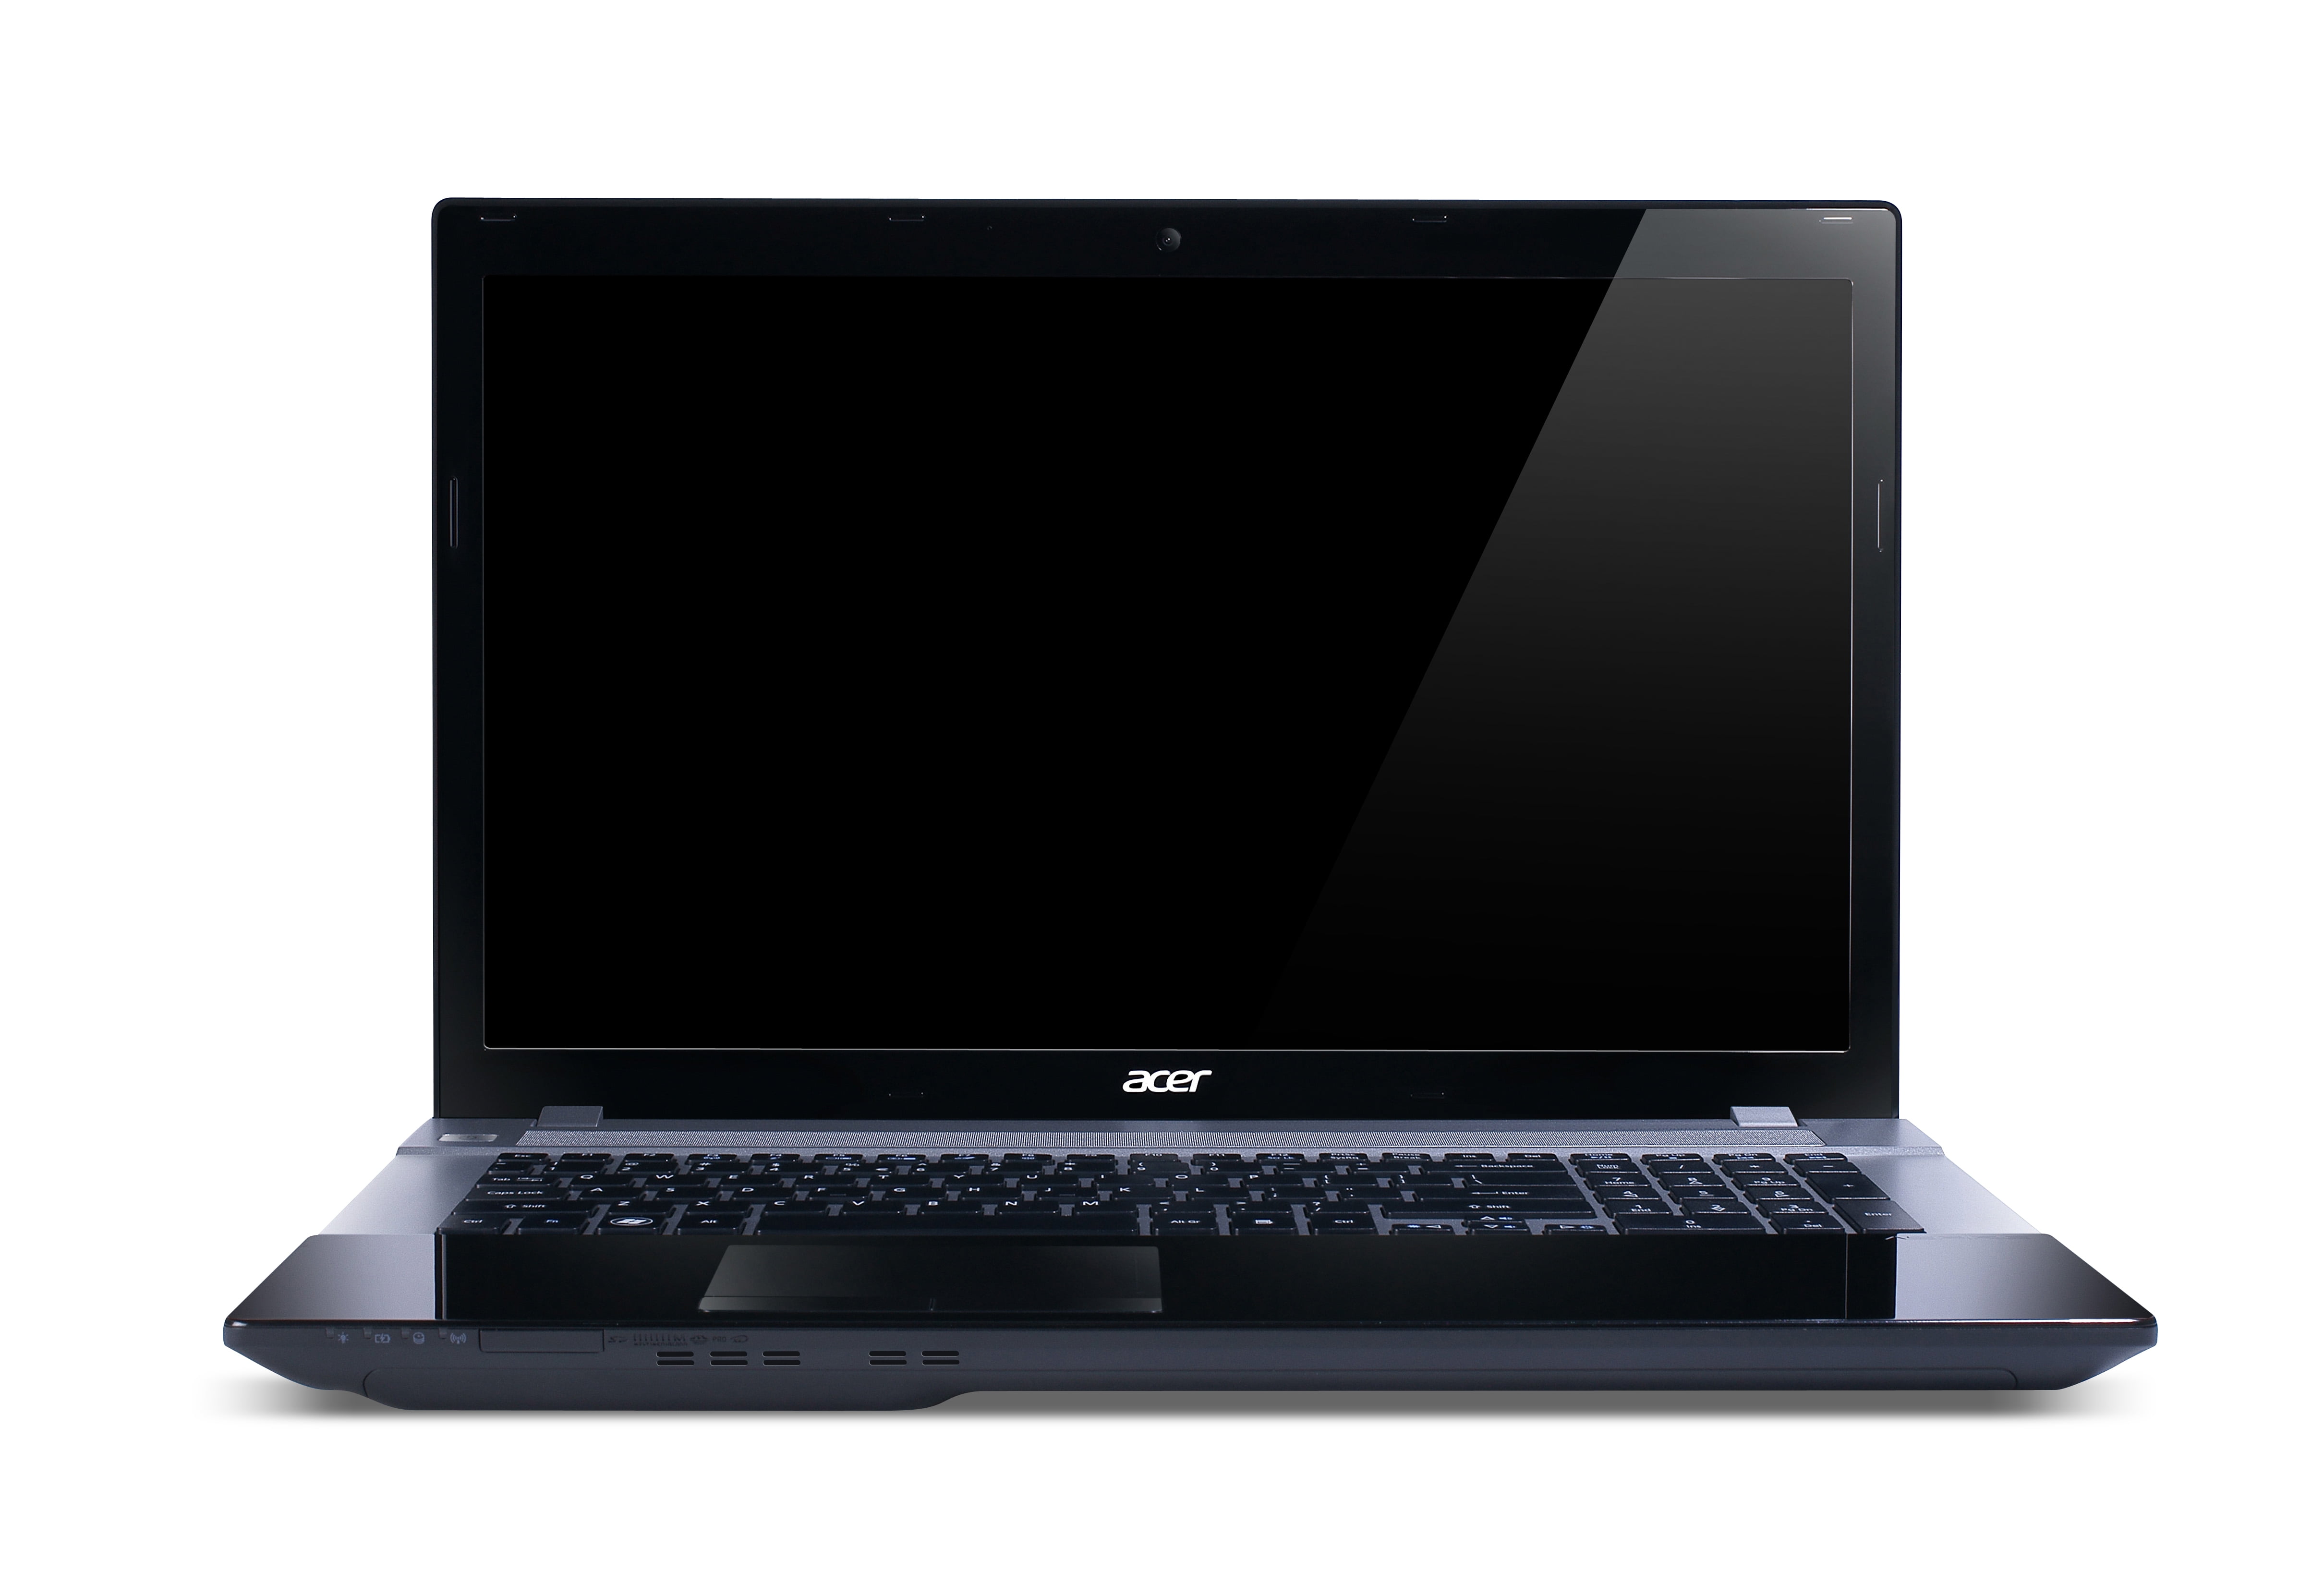 Vleien Vuil Plantkunde Acer Aspire 17.3" Laptop, Intel Core i3 i3-2370M, 500GB HD, DVD Writer,  Windows 7 Home Premium, V3-771-32376G50Makk - Walmart.com